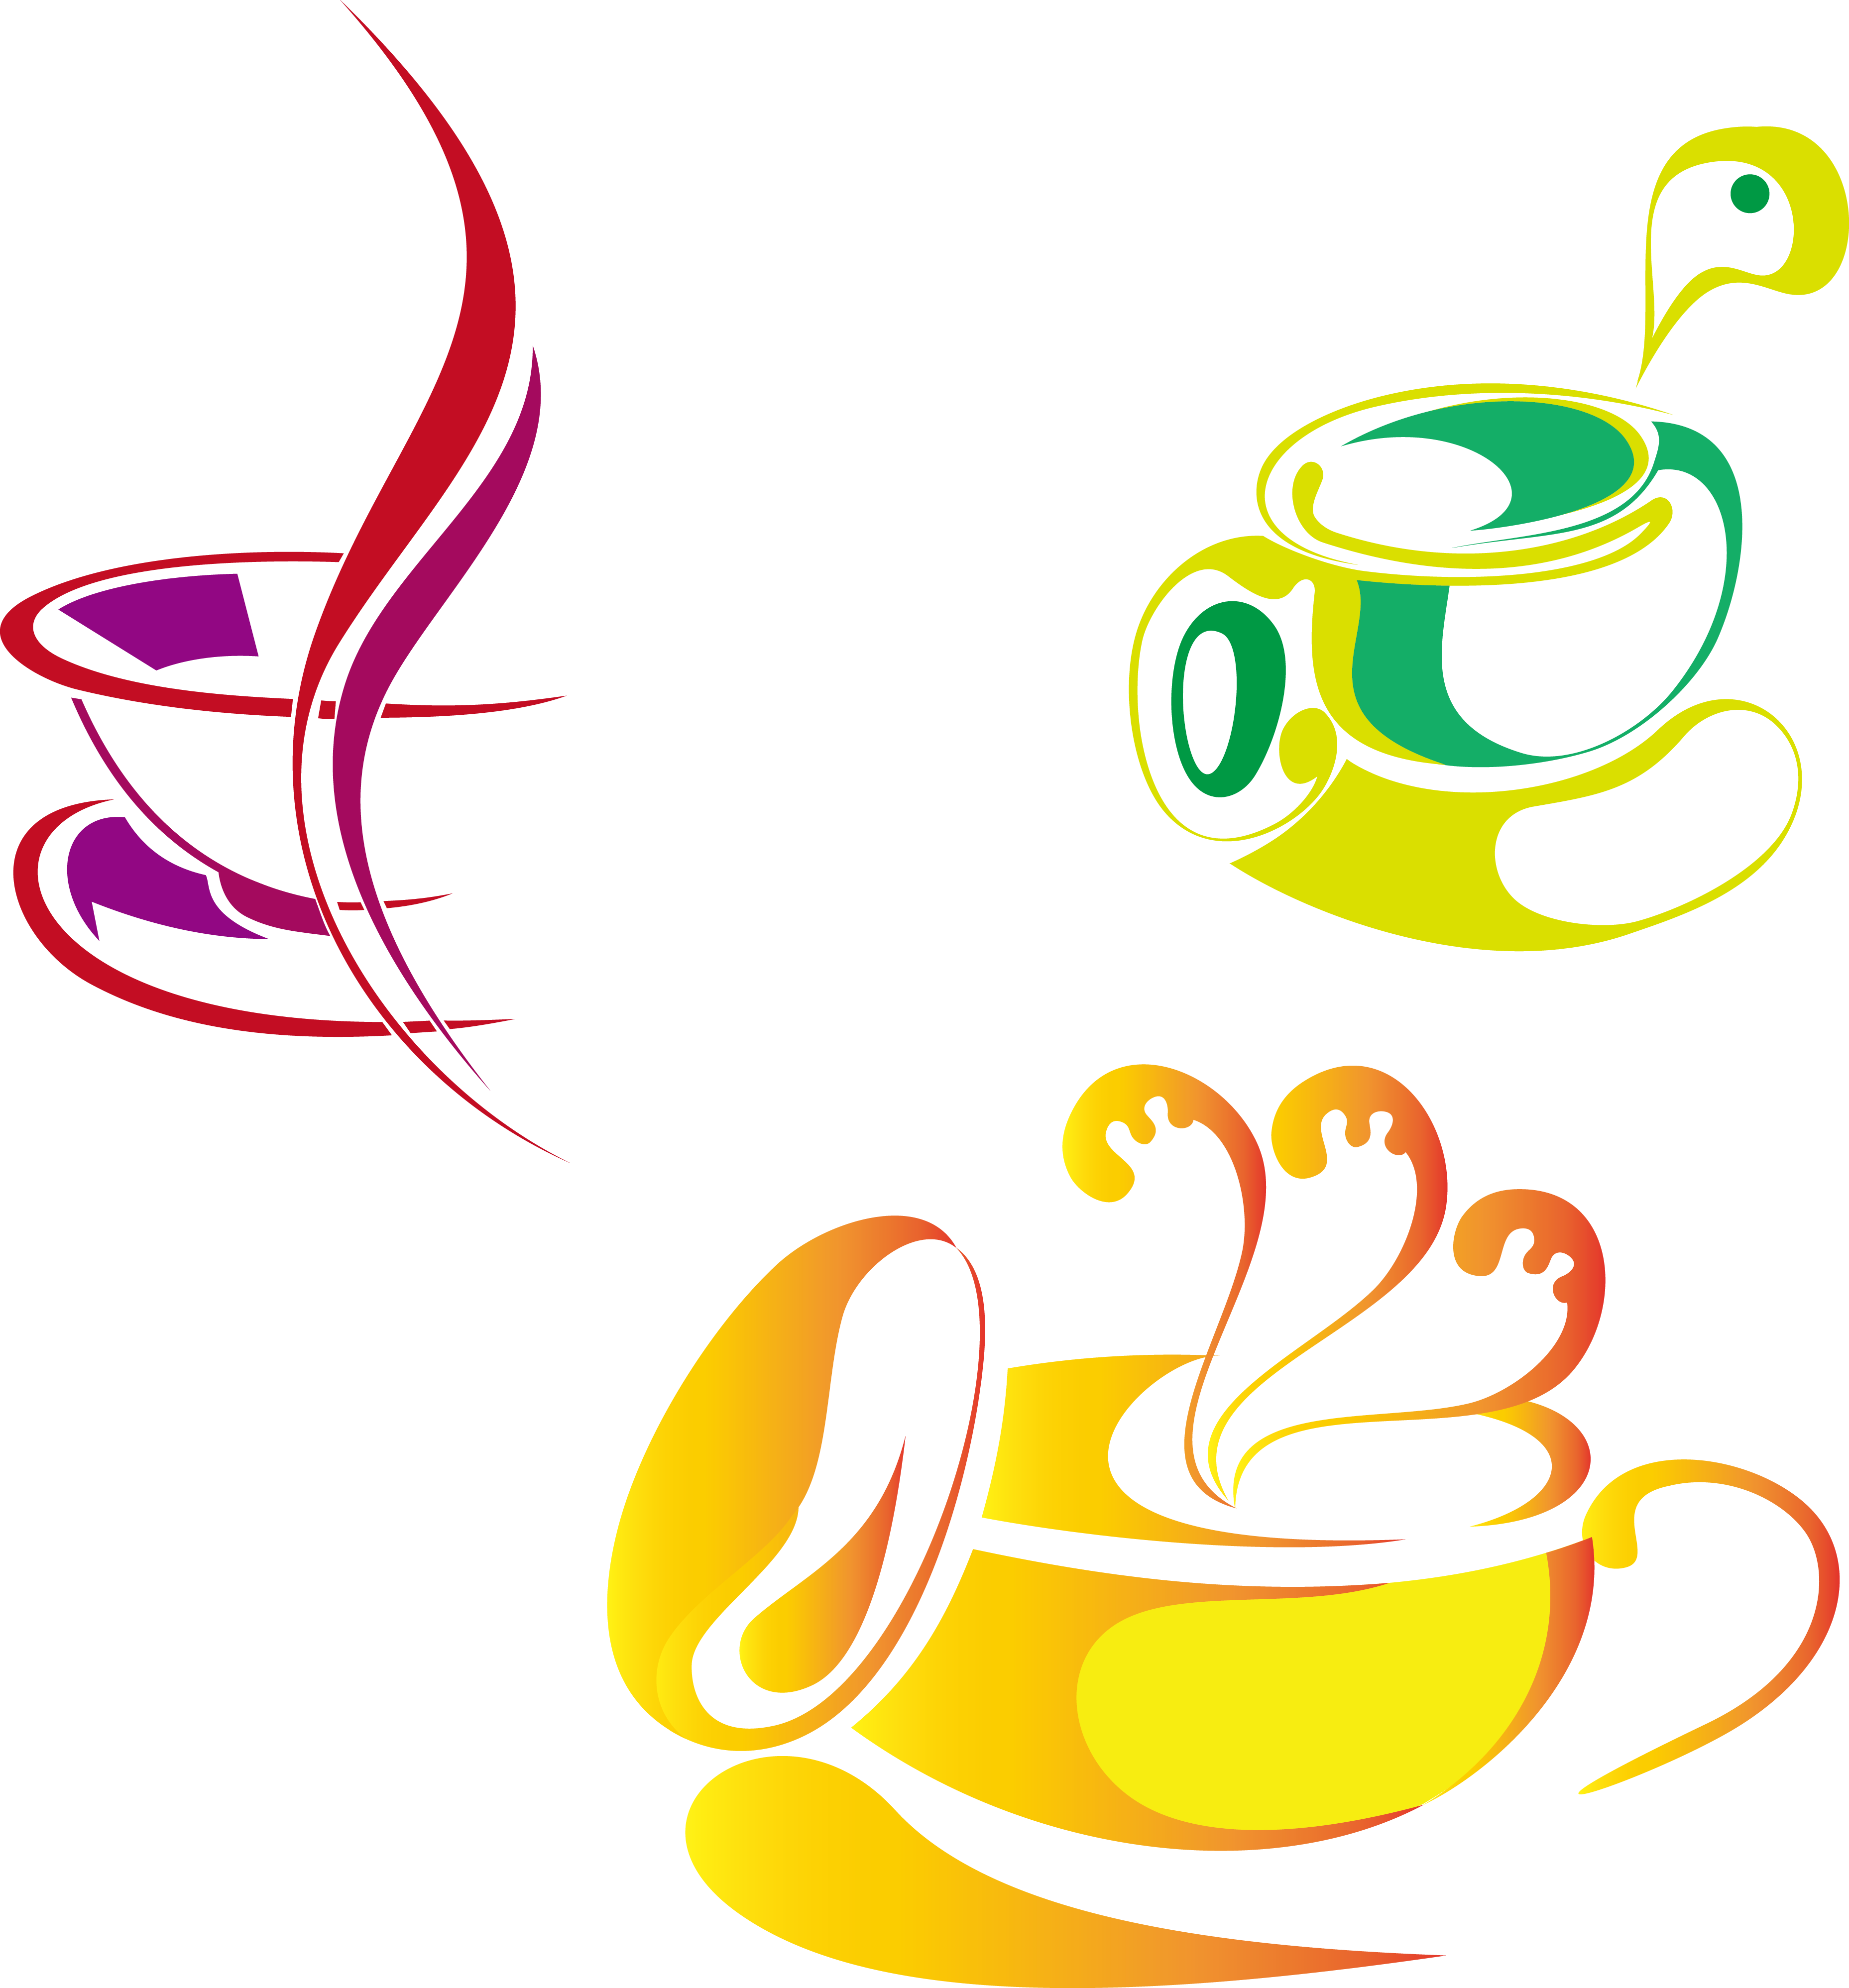 Coffee cup Logo Teacup Clip art.